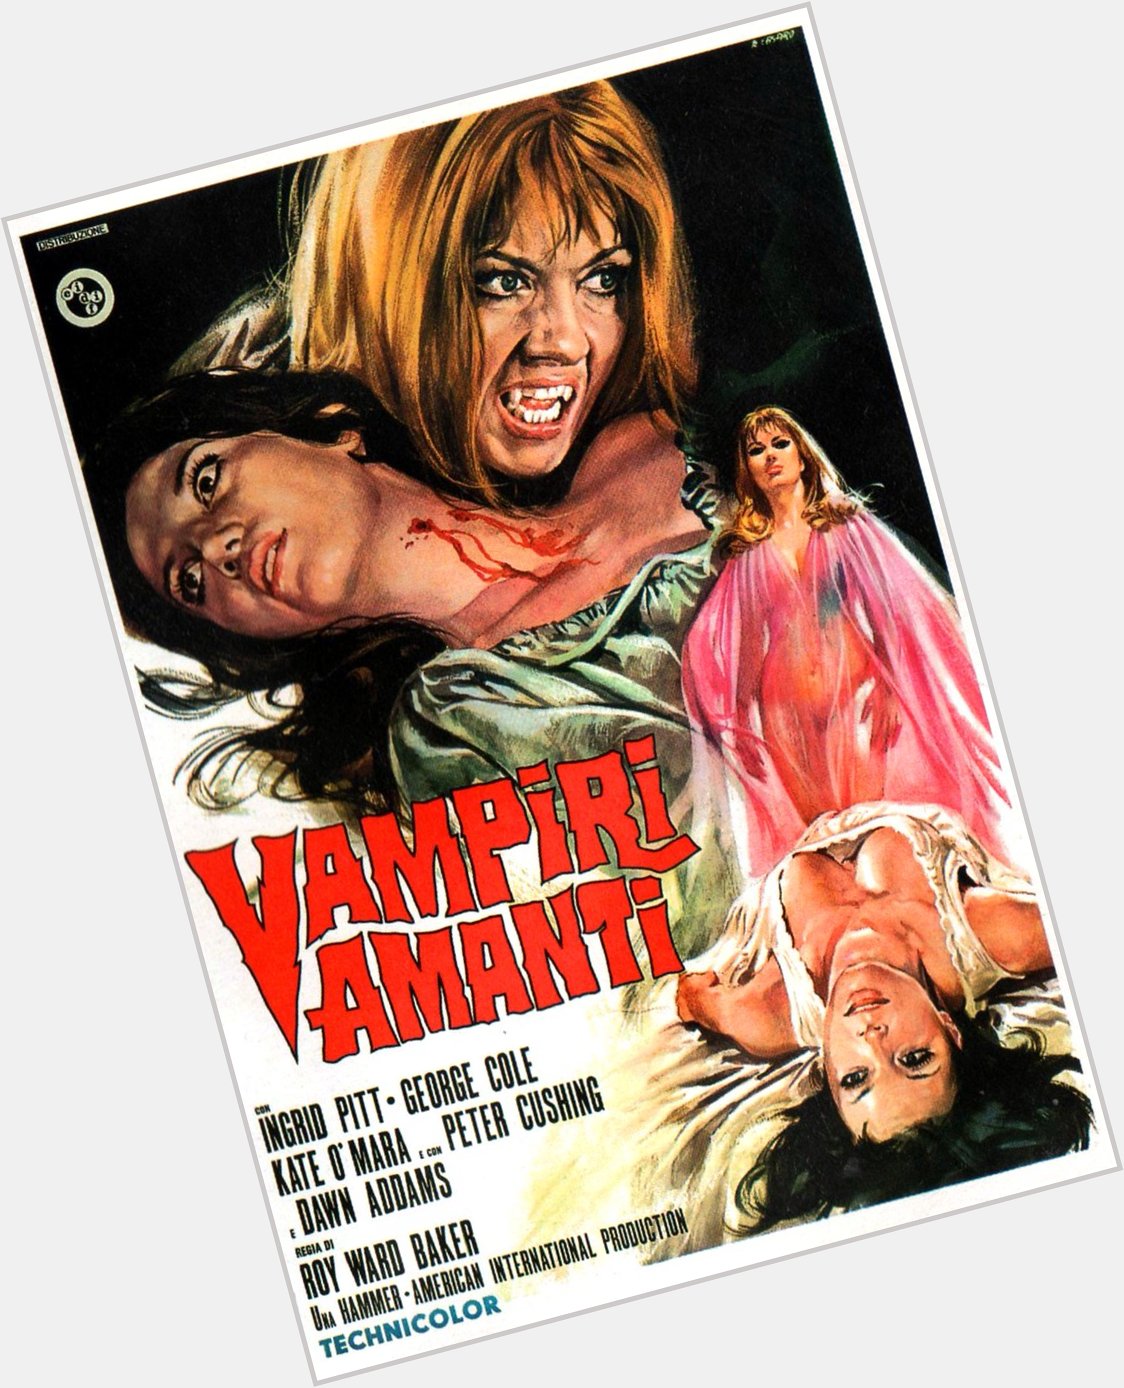 Happy birthday to Ingrid Pitt - THE VAMPIRE LOVERS - 1970 - Italian release poster 